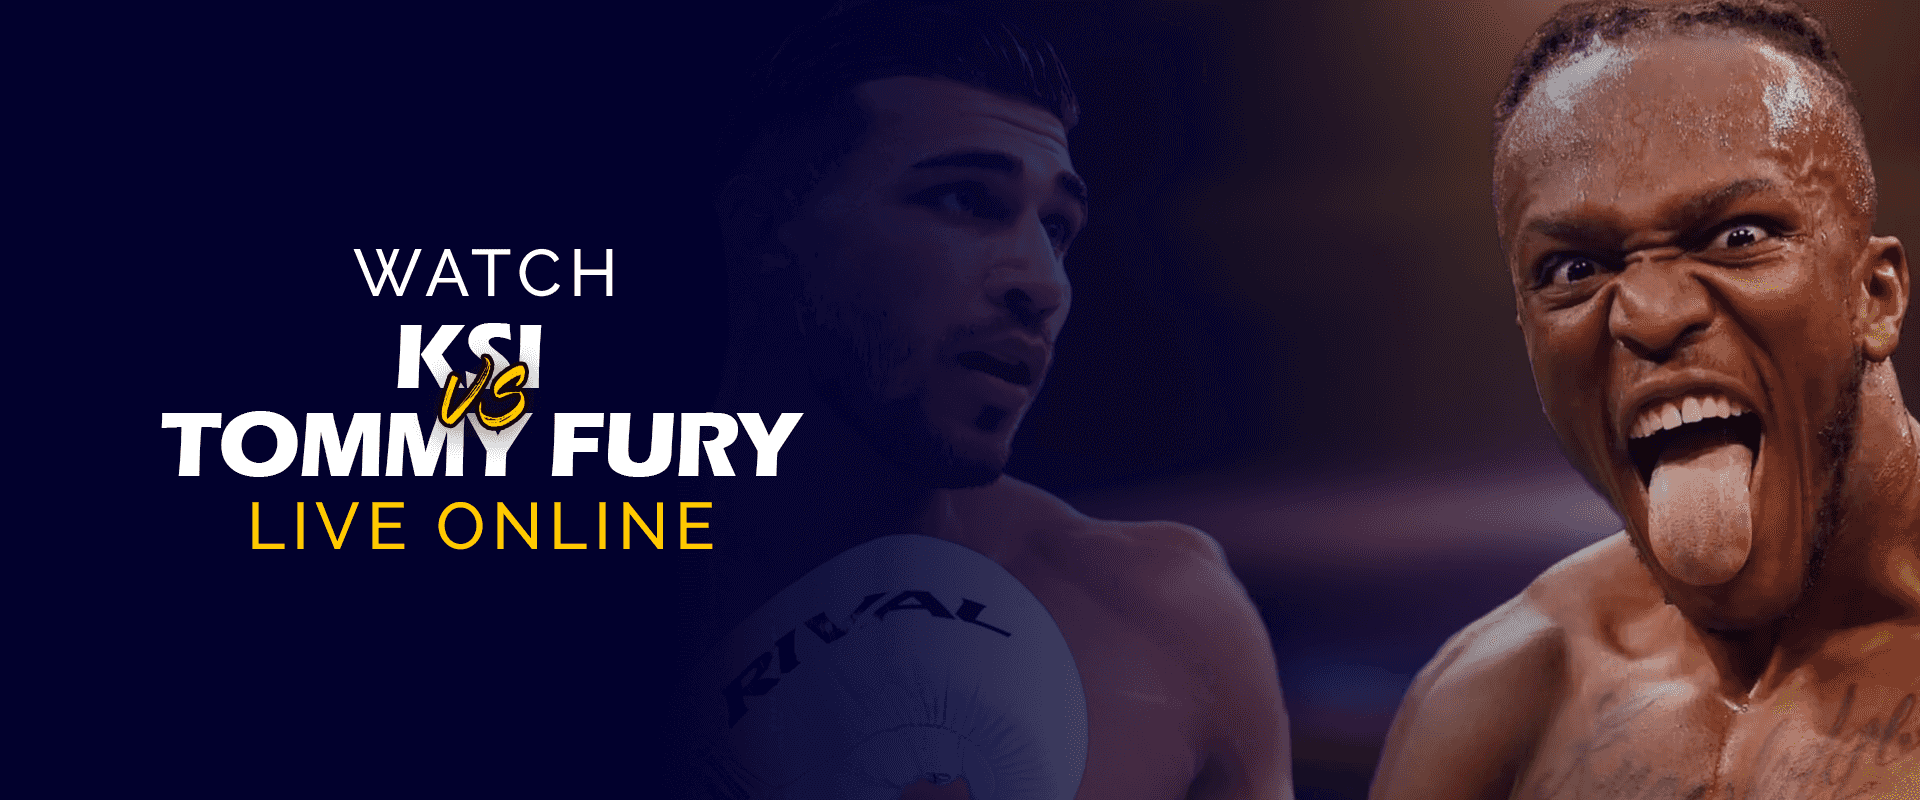 Watch KSI vs Tommy Fury Live Online